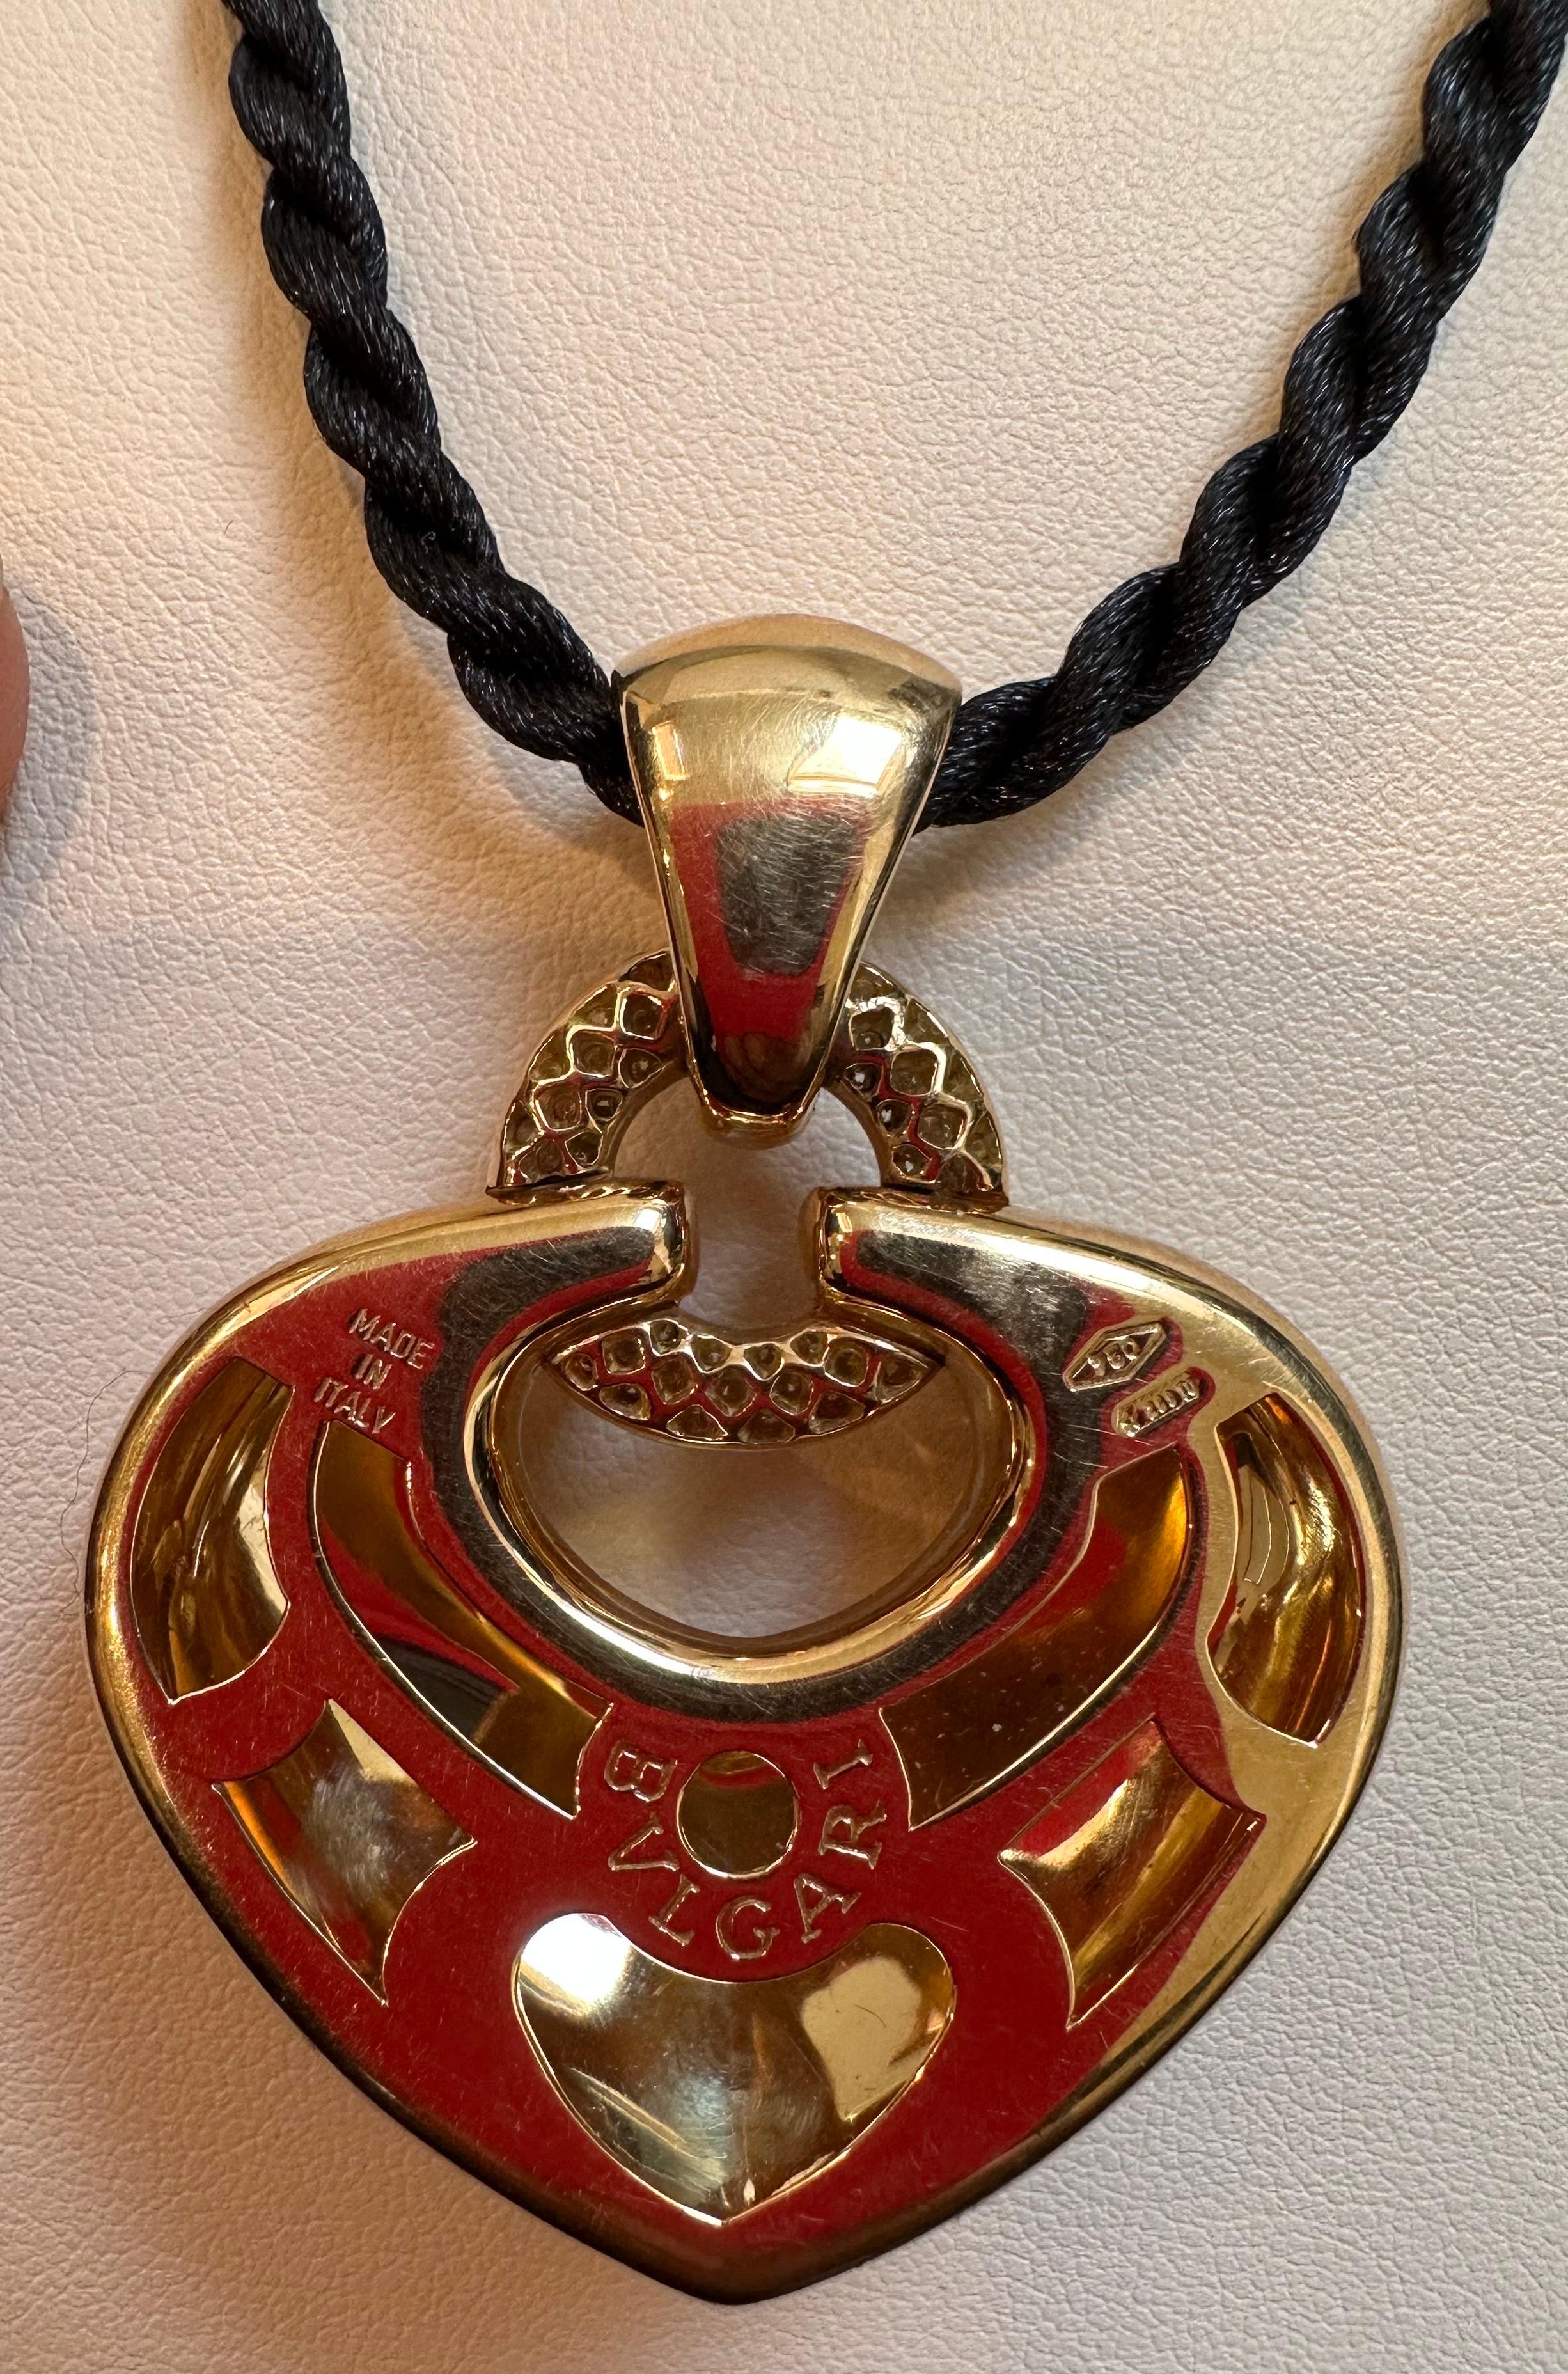 Bulgari 'Doppio Cuore' Gold and Diamond Puffed Heart Pendant on the Leather Cord 5